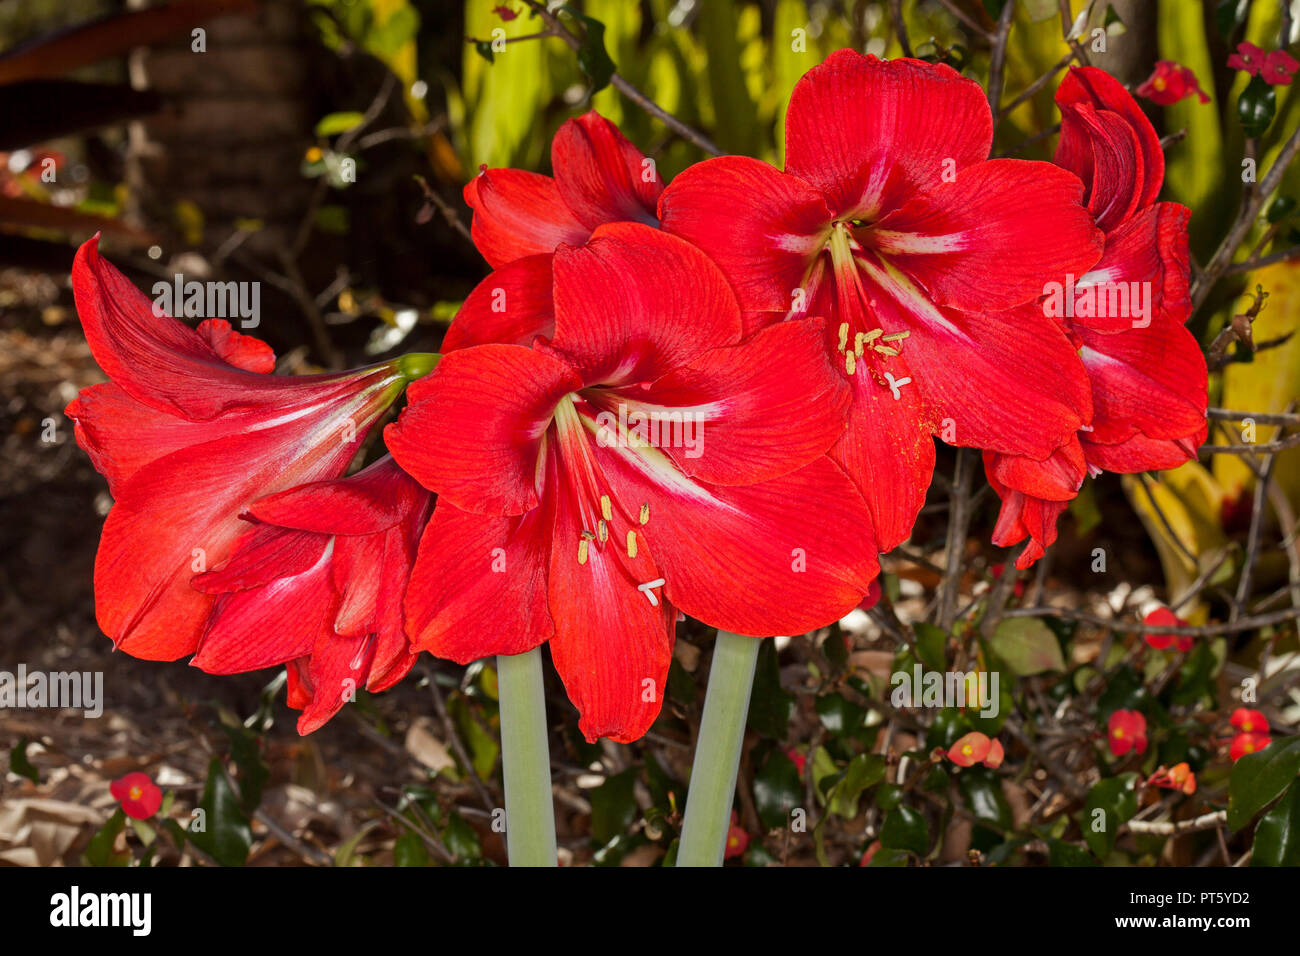 Cluster of large vivid red flowers of Hippeastrum, spring flowering bulb, against dark background Stock Photo